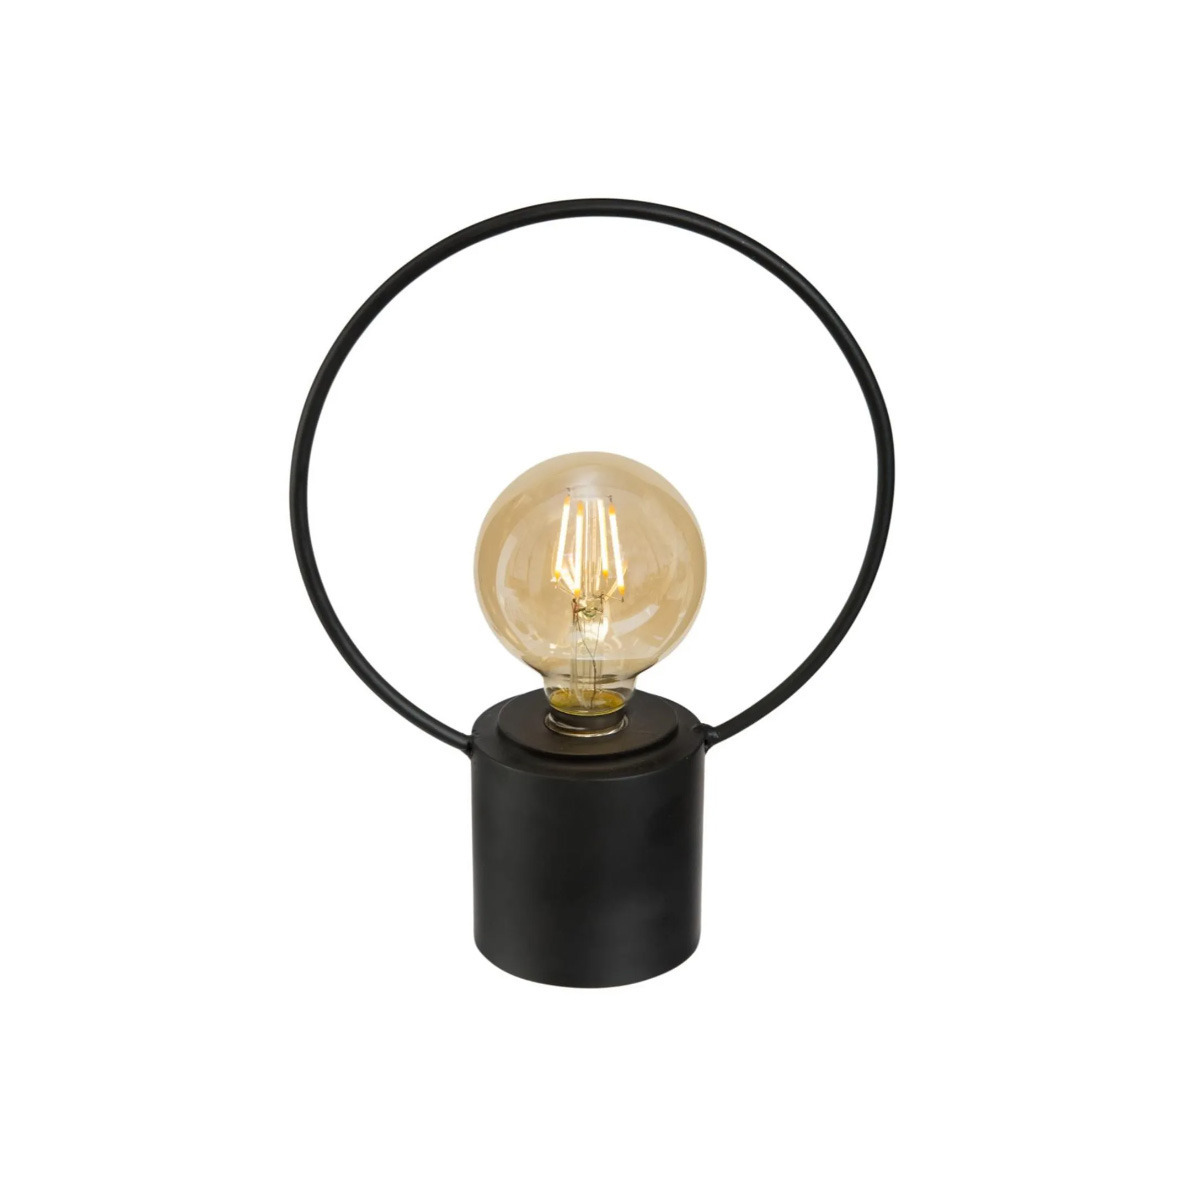 LED lamp zwart metaal zonder snoer H27.5 vintage tafellamp-nachtlamp